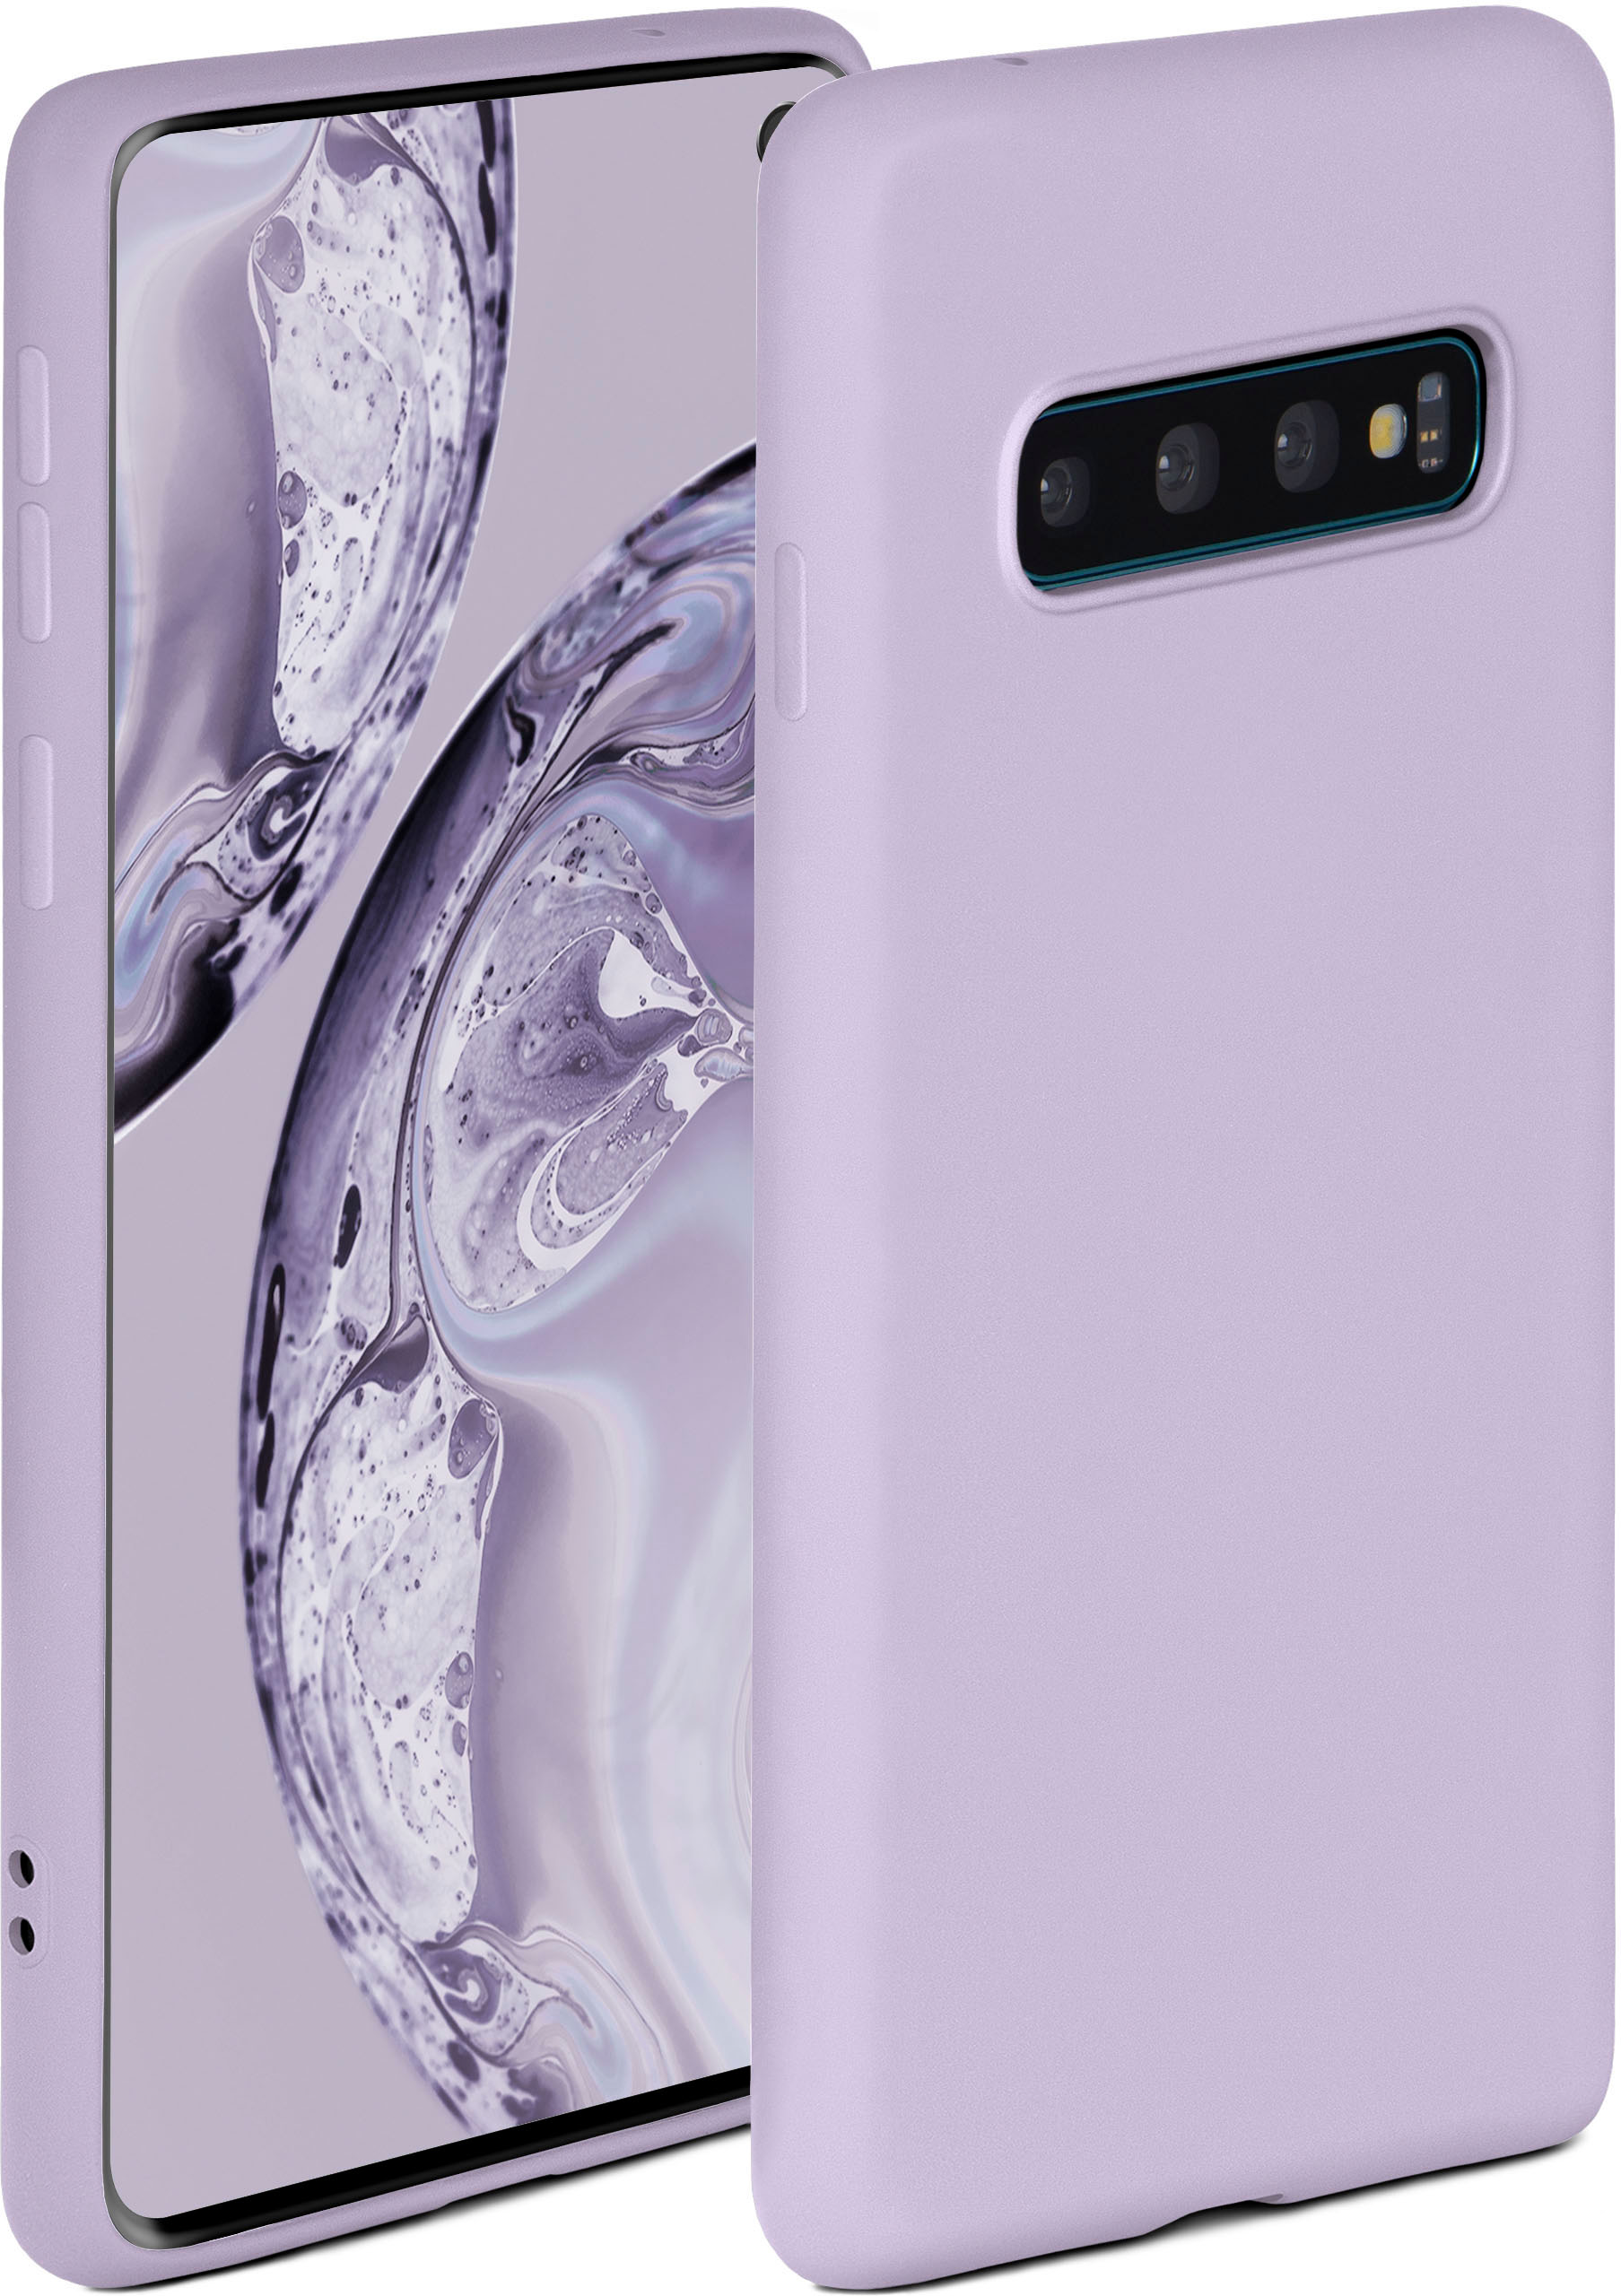 Samsung, ONEFLOW S10, Flieder Soft Case, Galaxy Backcover,